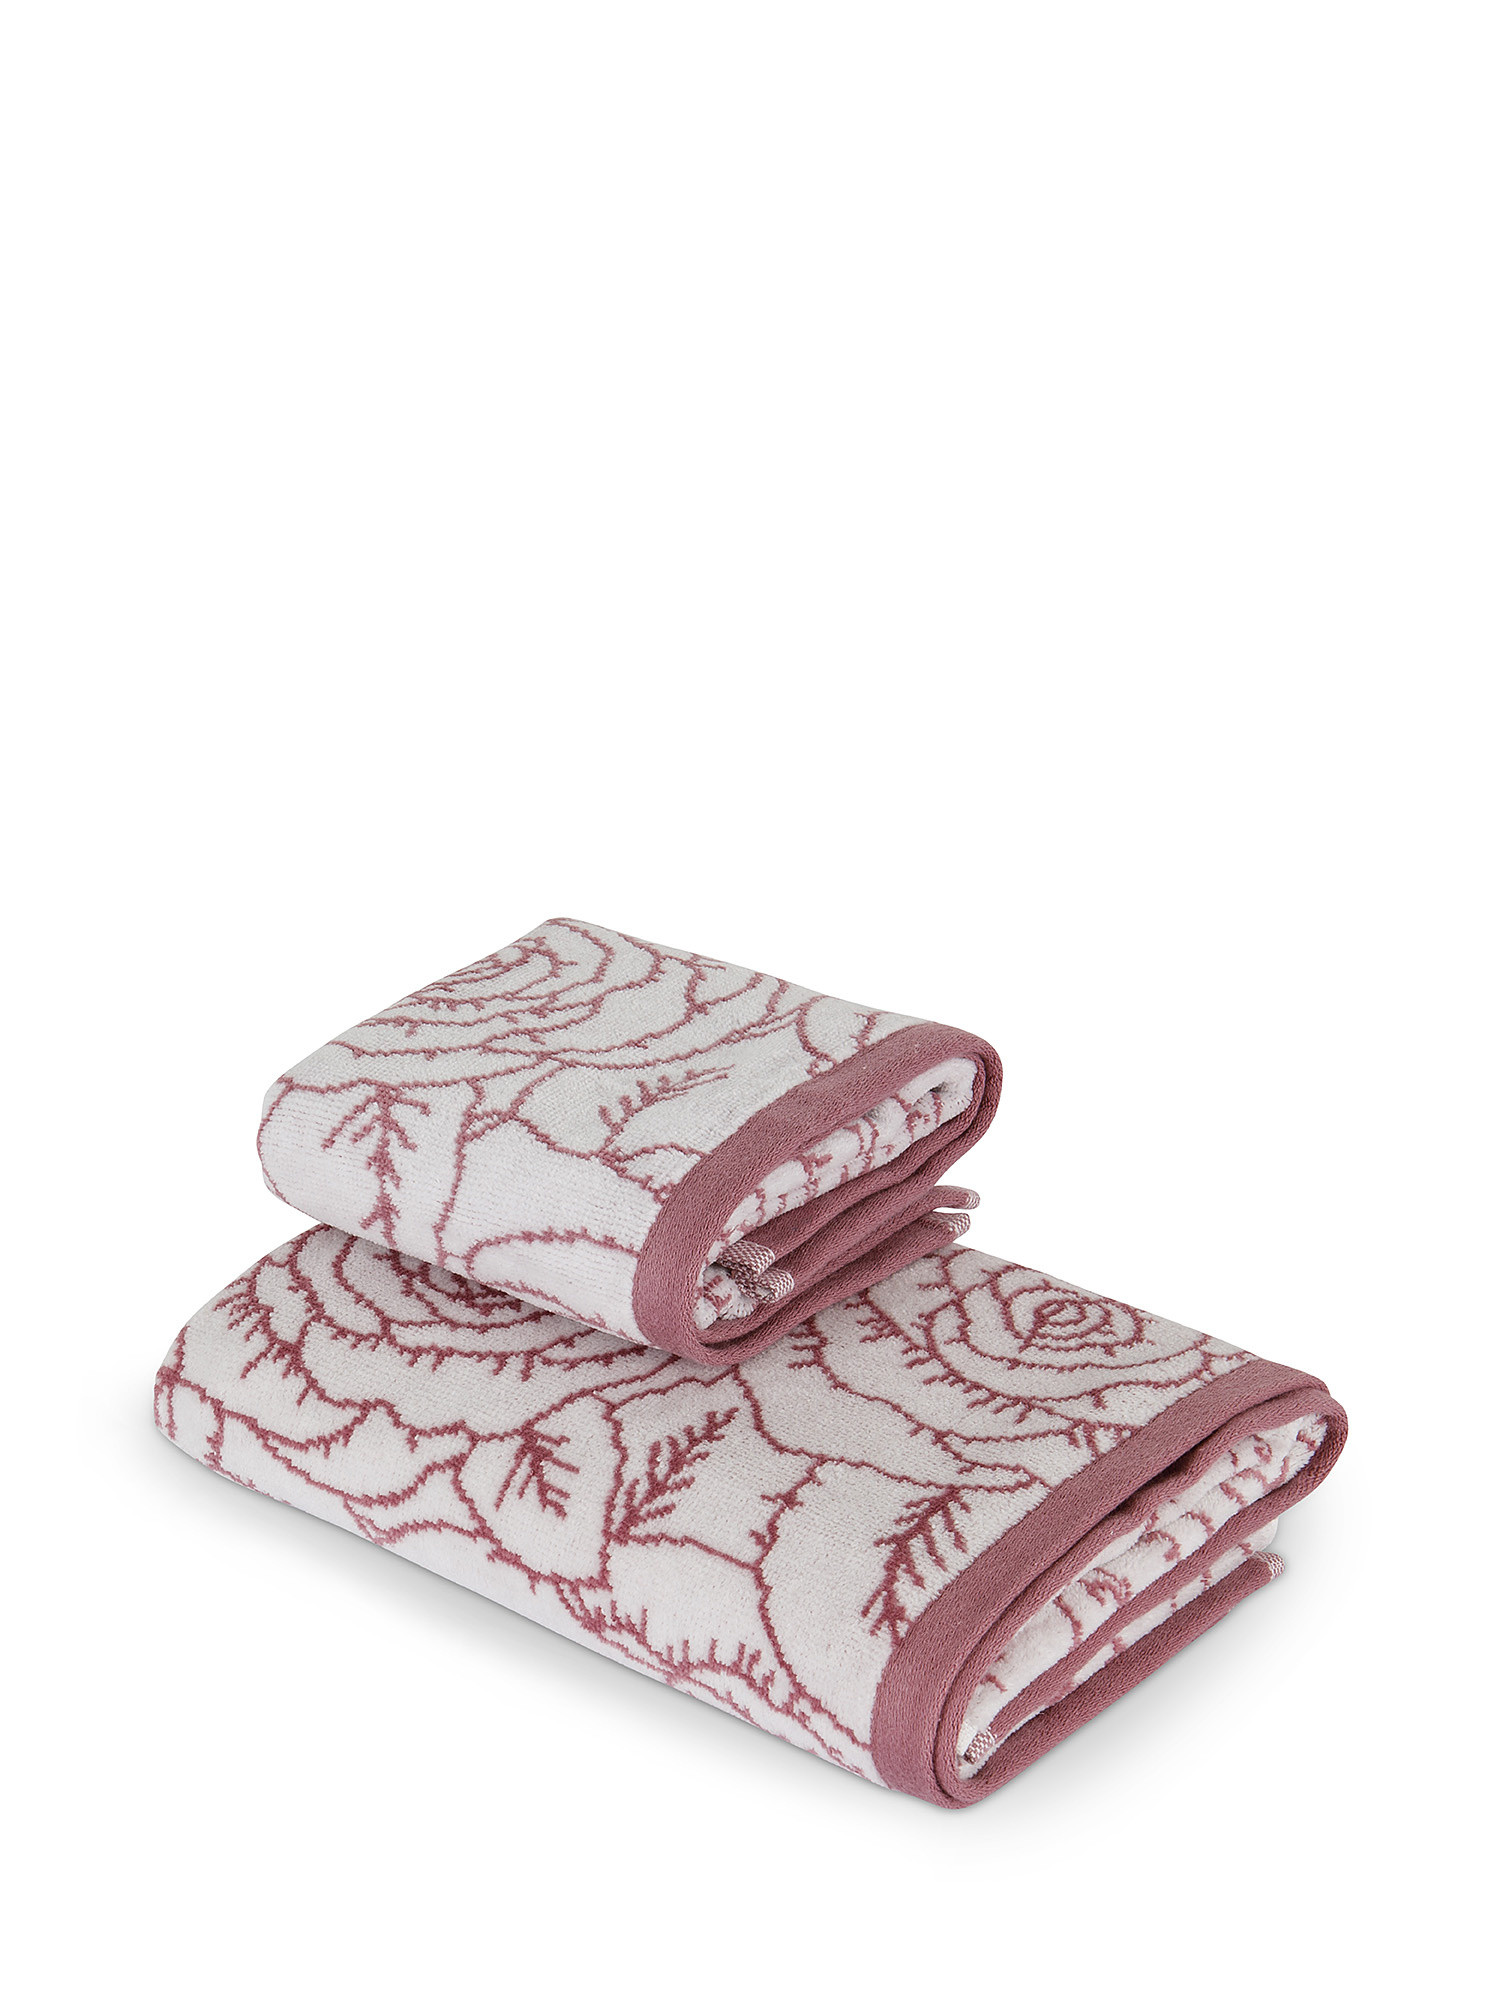 Asciugamano cotone velour motivo rose, Rosa scuro, large image number 0